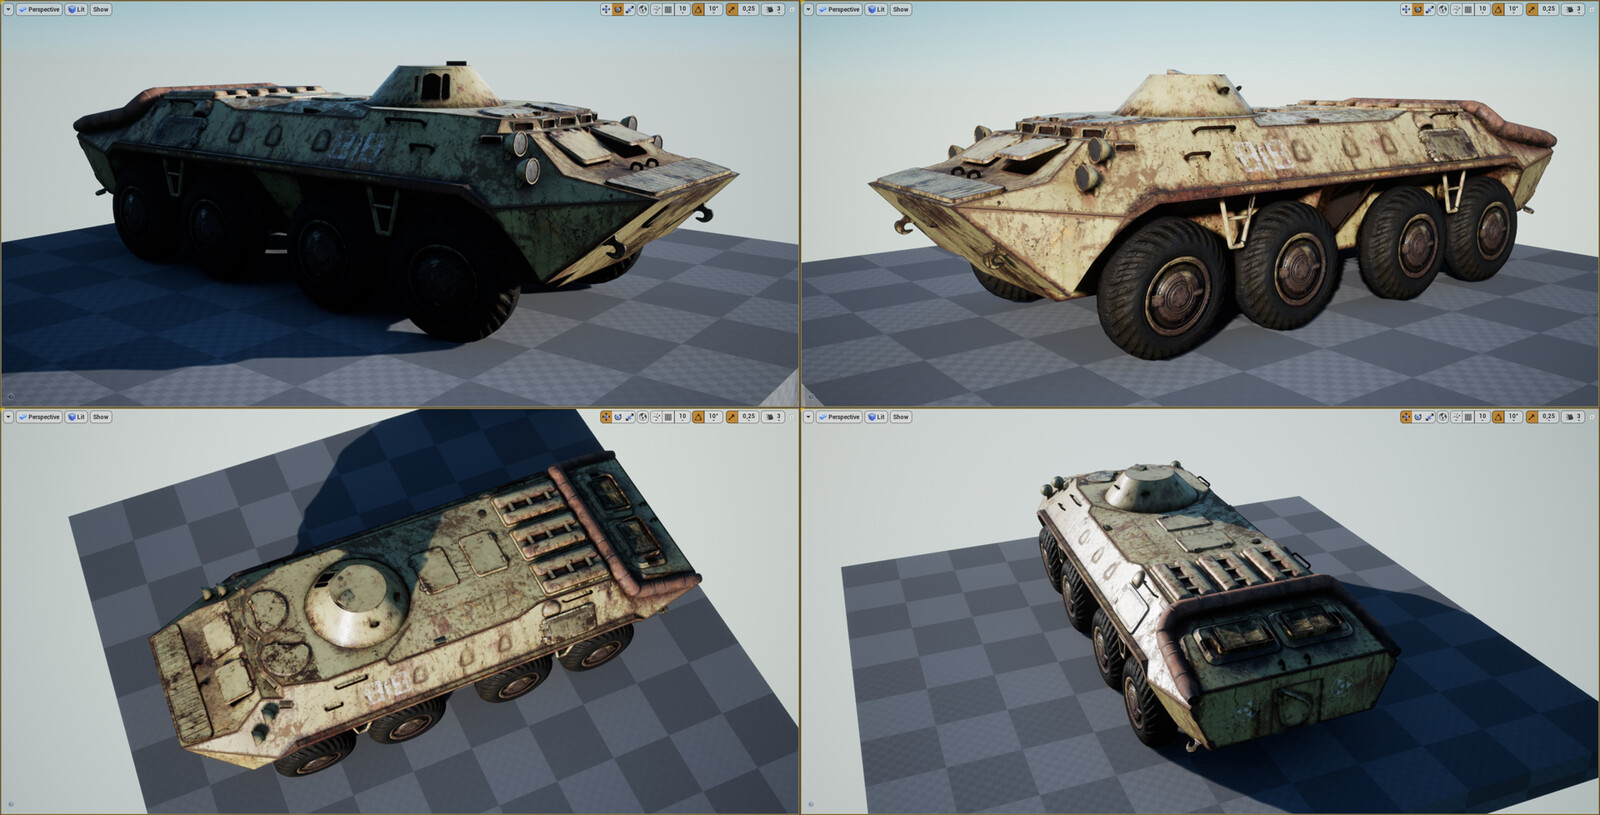 BTR-70 Quad View in Unreal Engine 4.